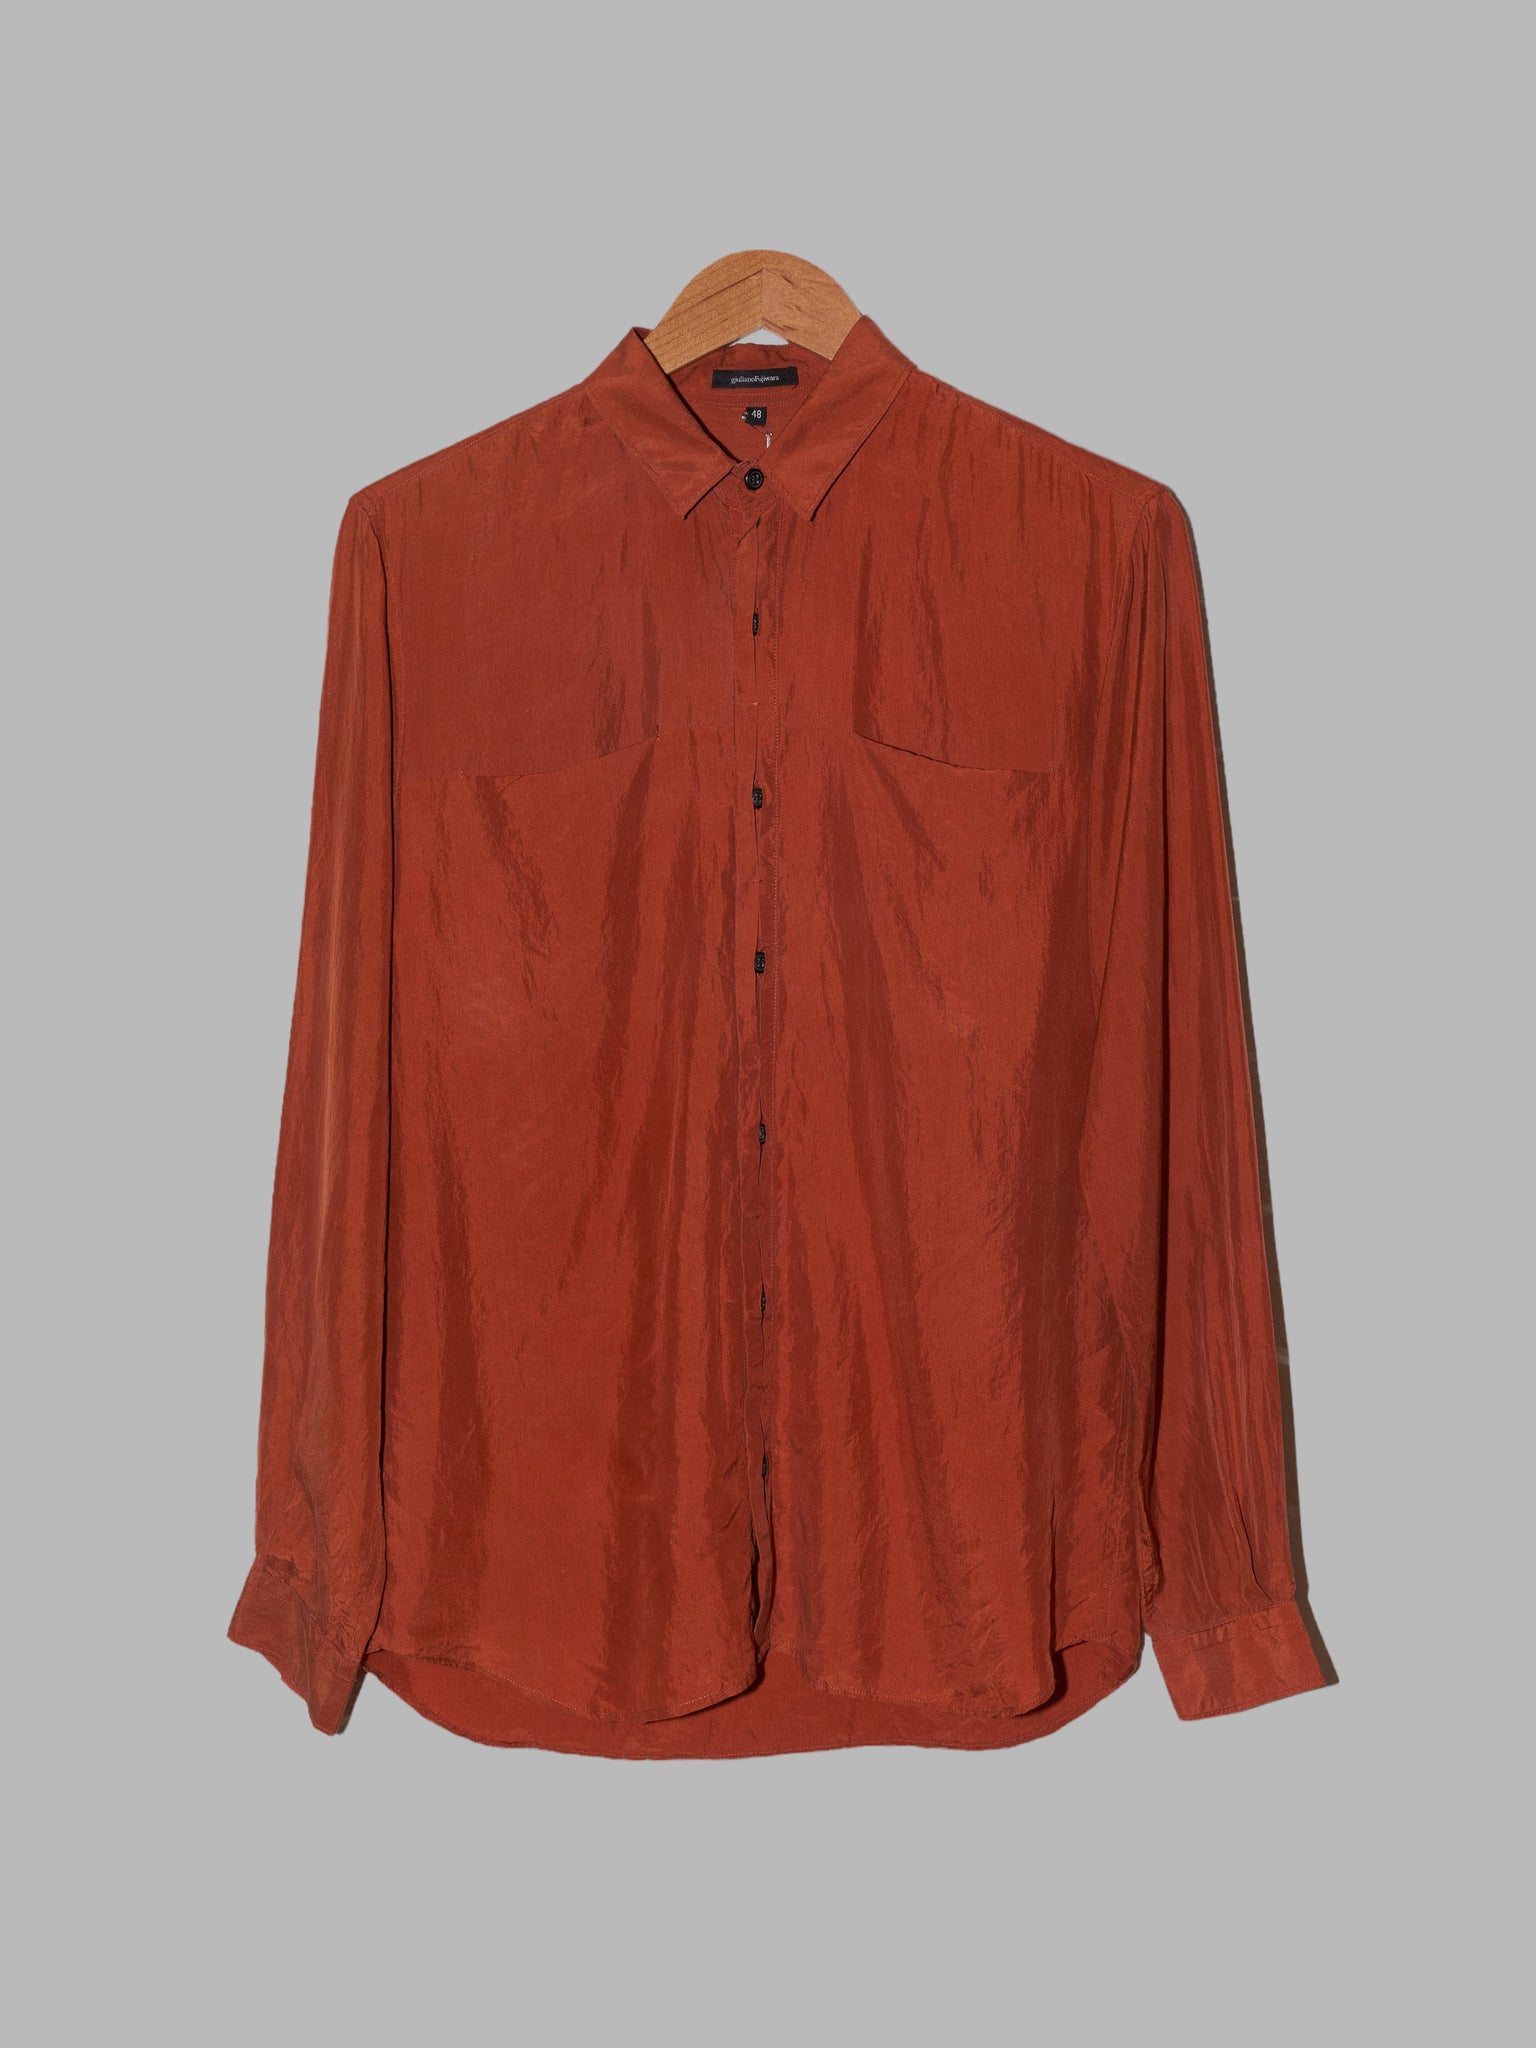 Giuliano Fujiwara burnt orange creased silk shirt - size 48